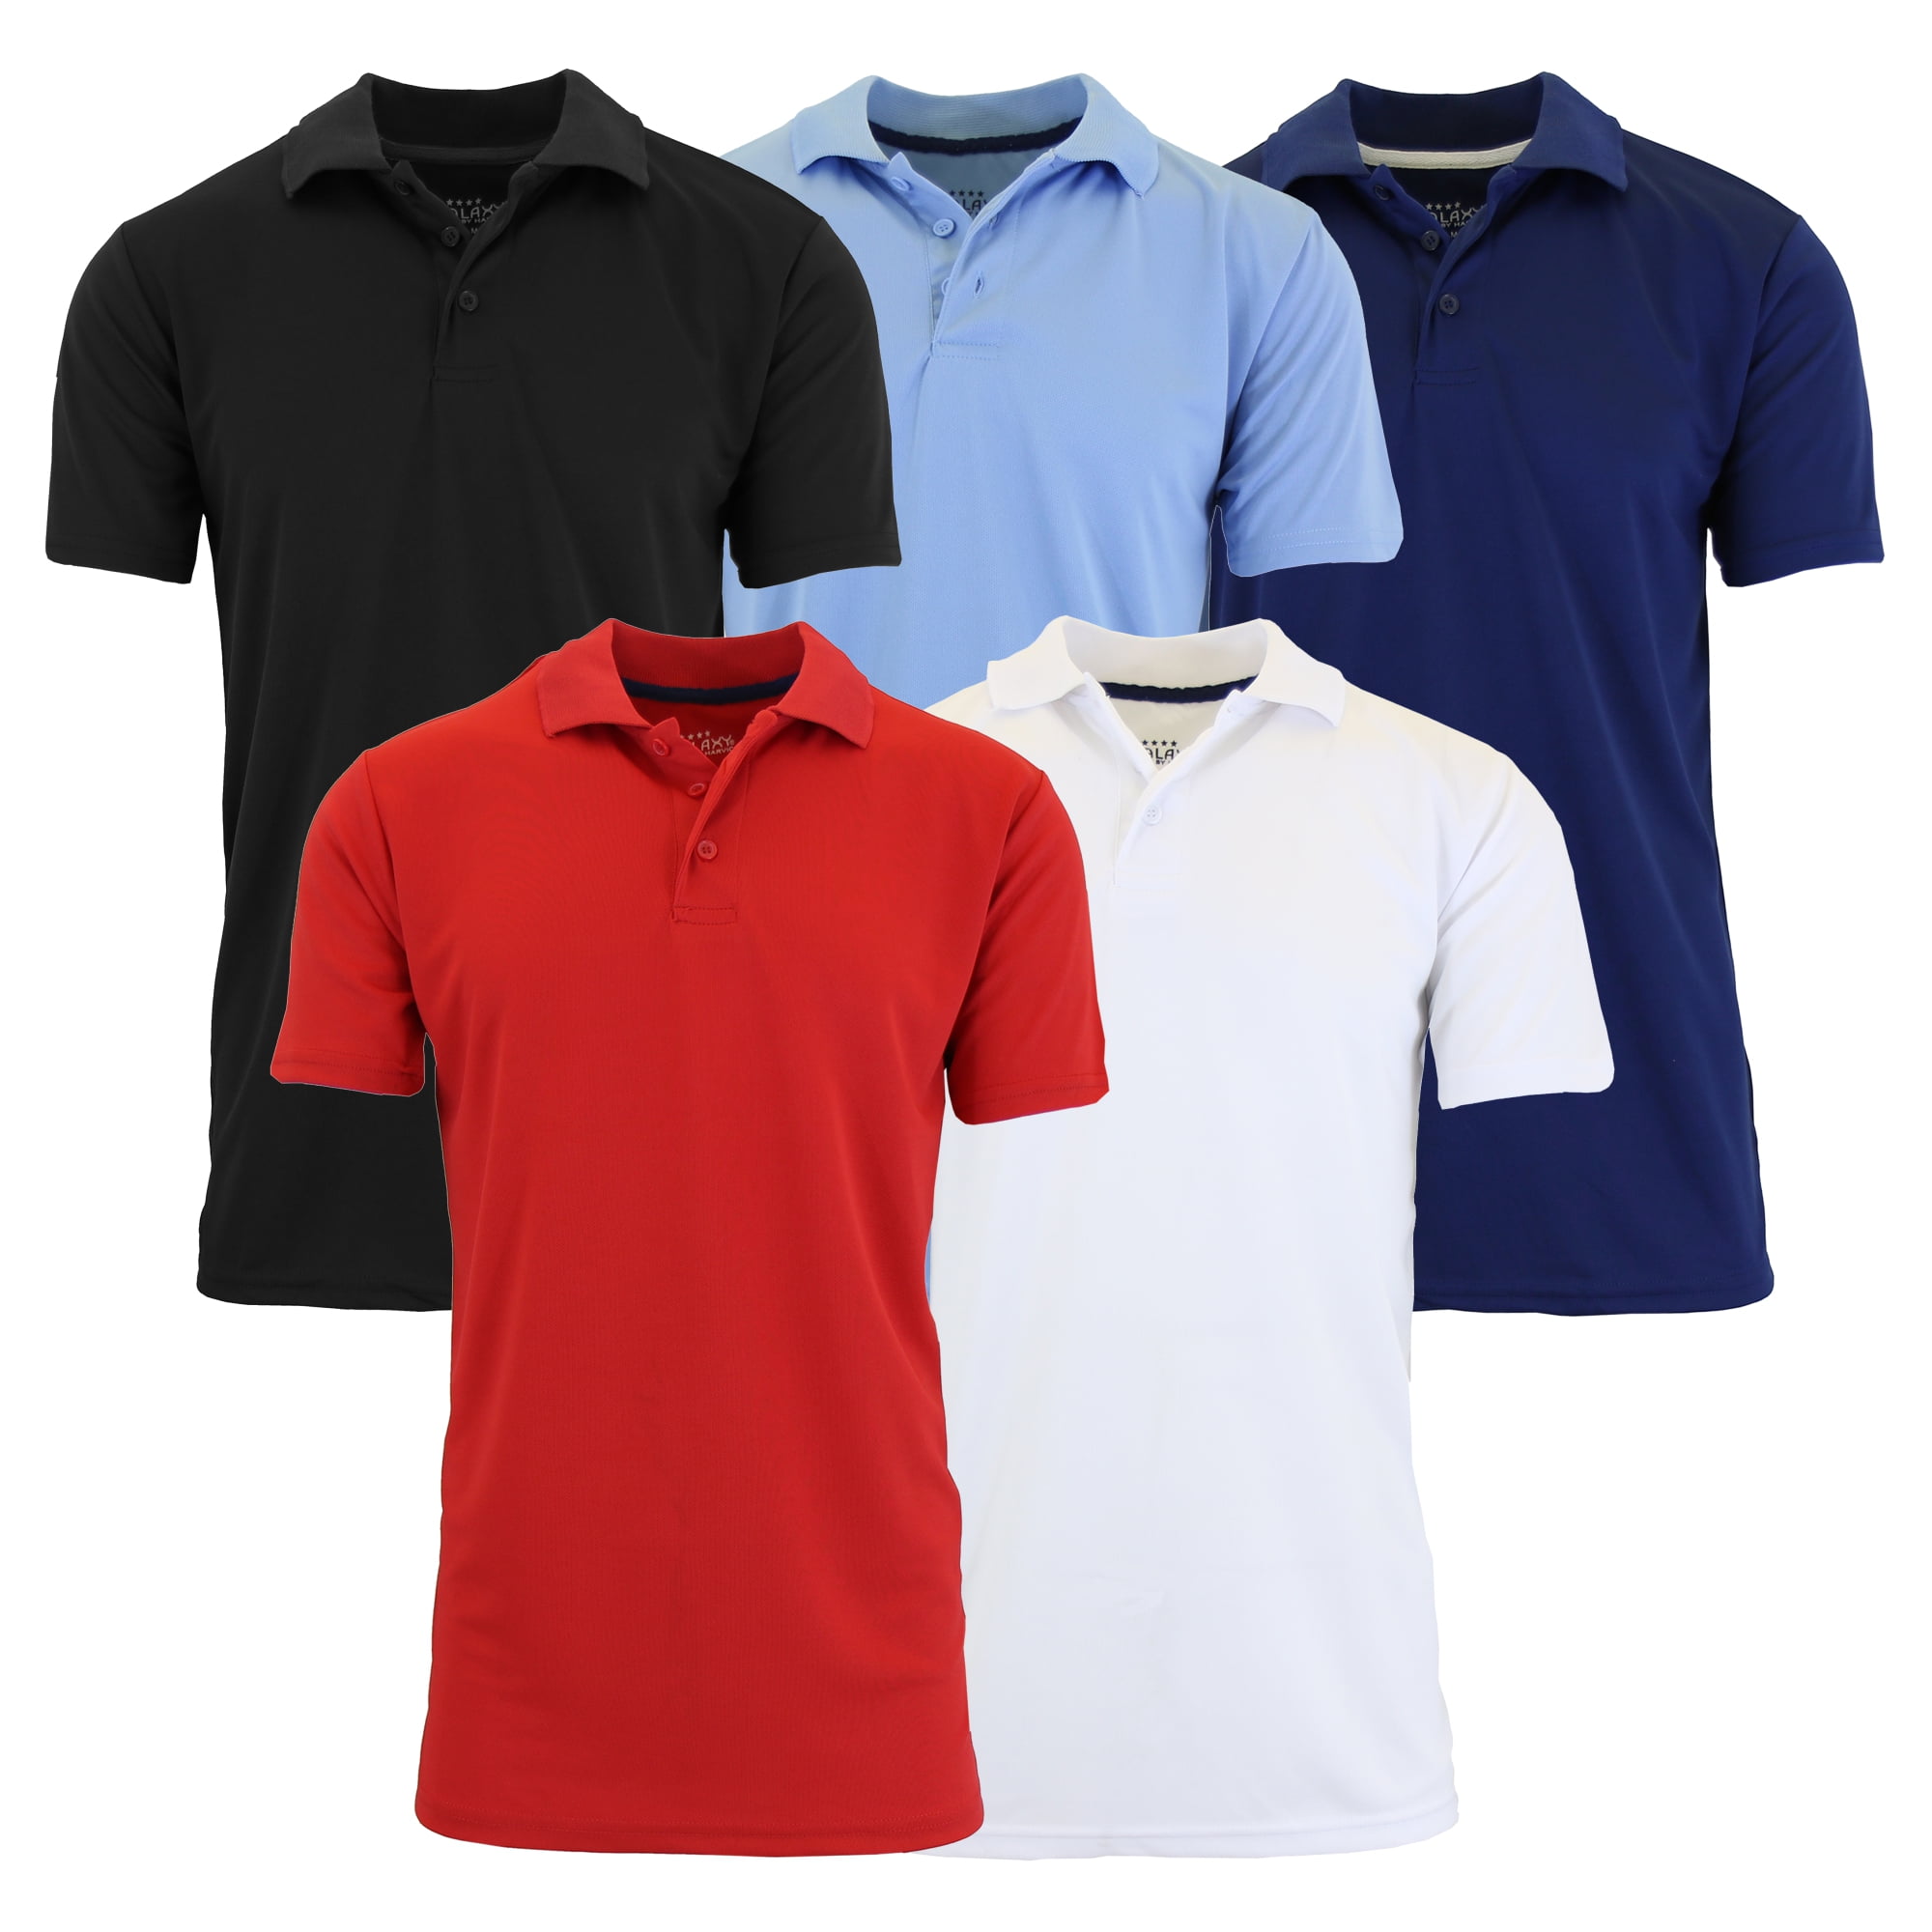 5-Pack Men's Dry Fit Moisture-Wicking Polo Shirt (S-3XL) - Walmart.com